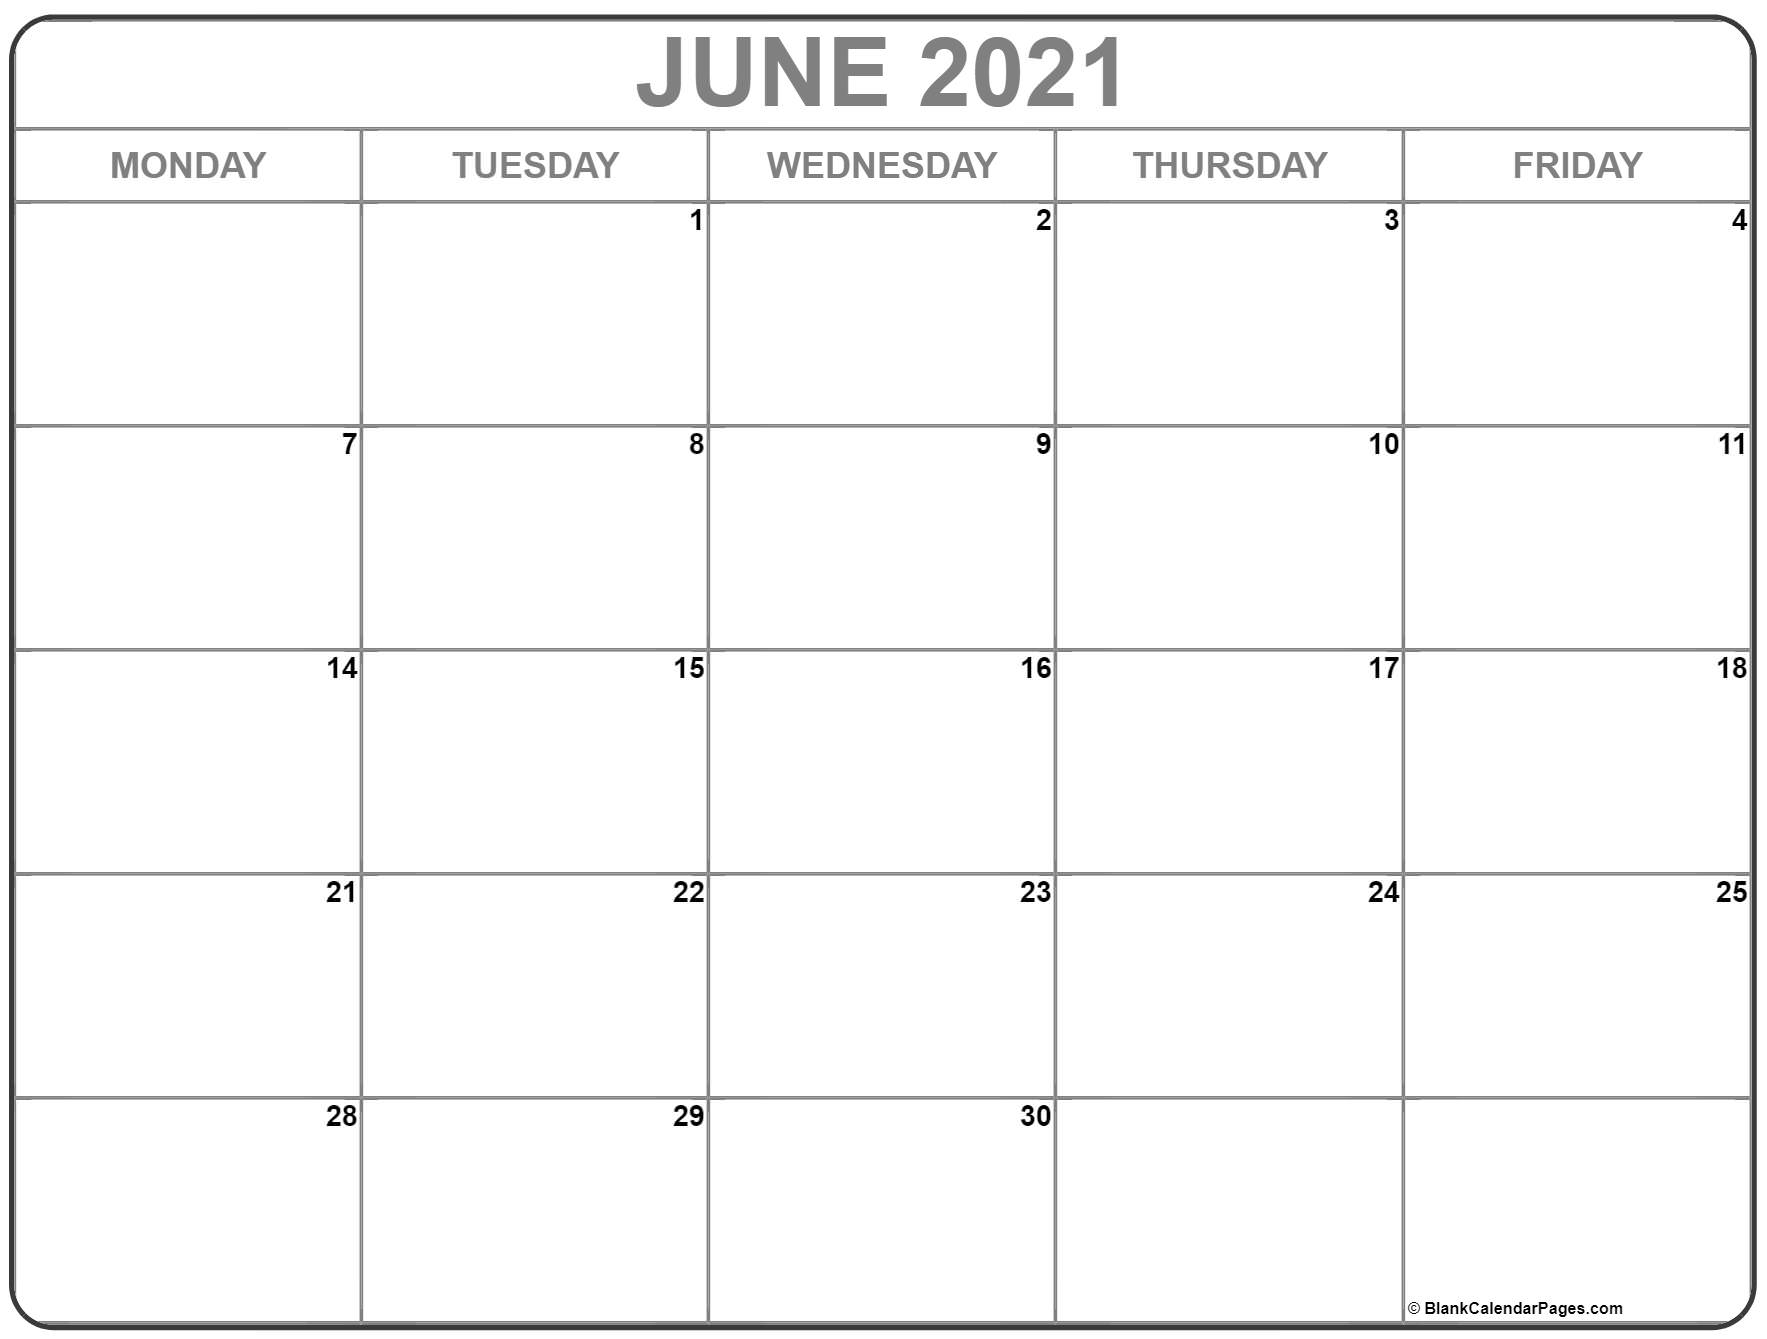 Pick July 2022 Calendar Monday Start